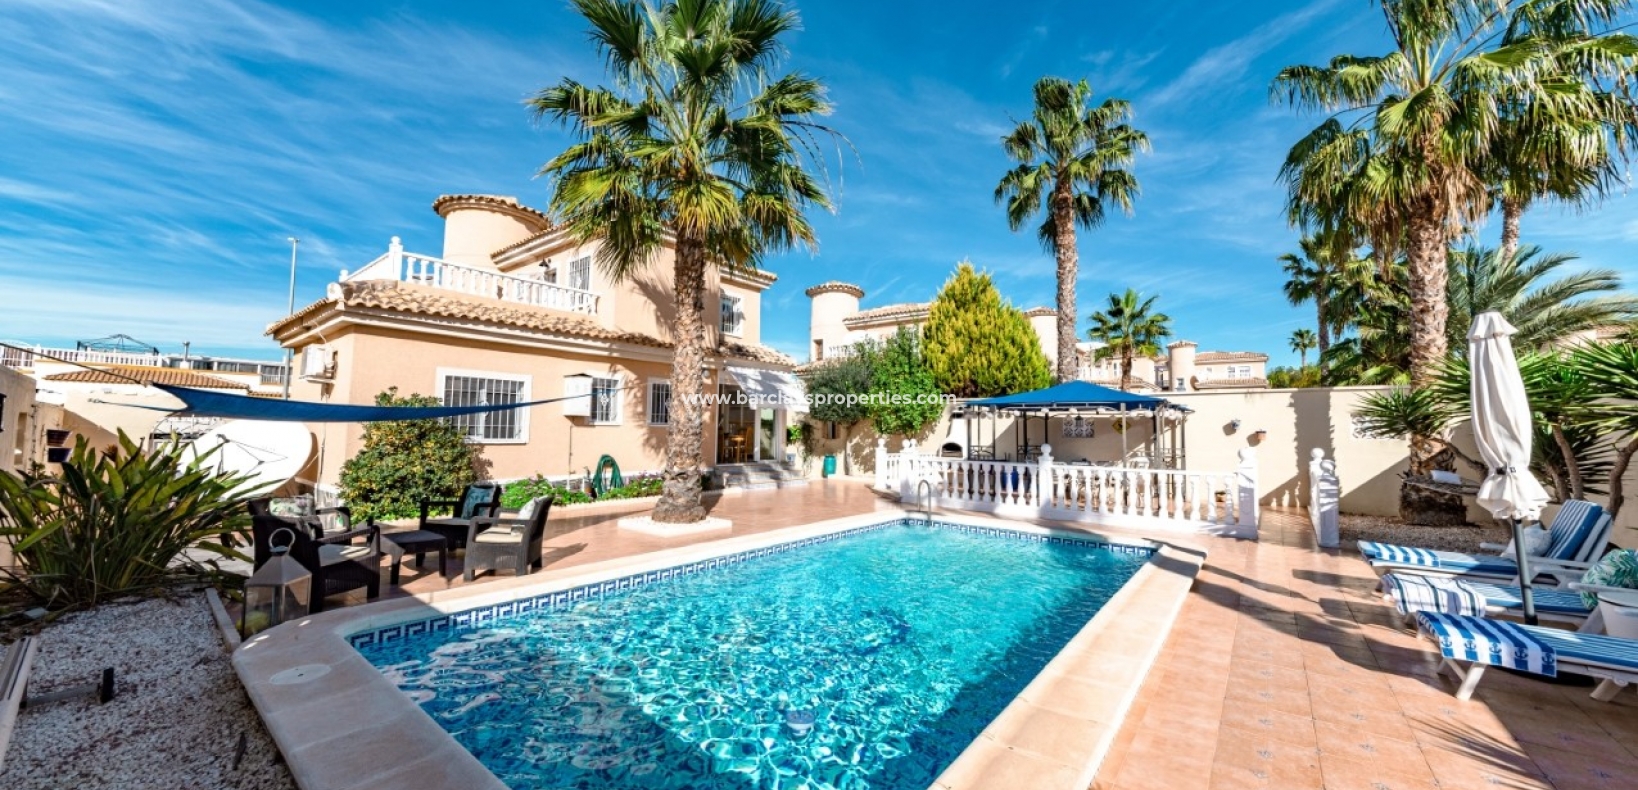 Garden - Prestige villa for sale in urbanisation La Marina Spain